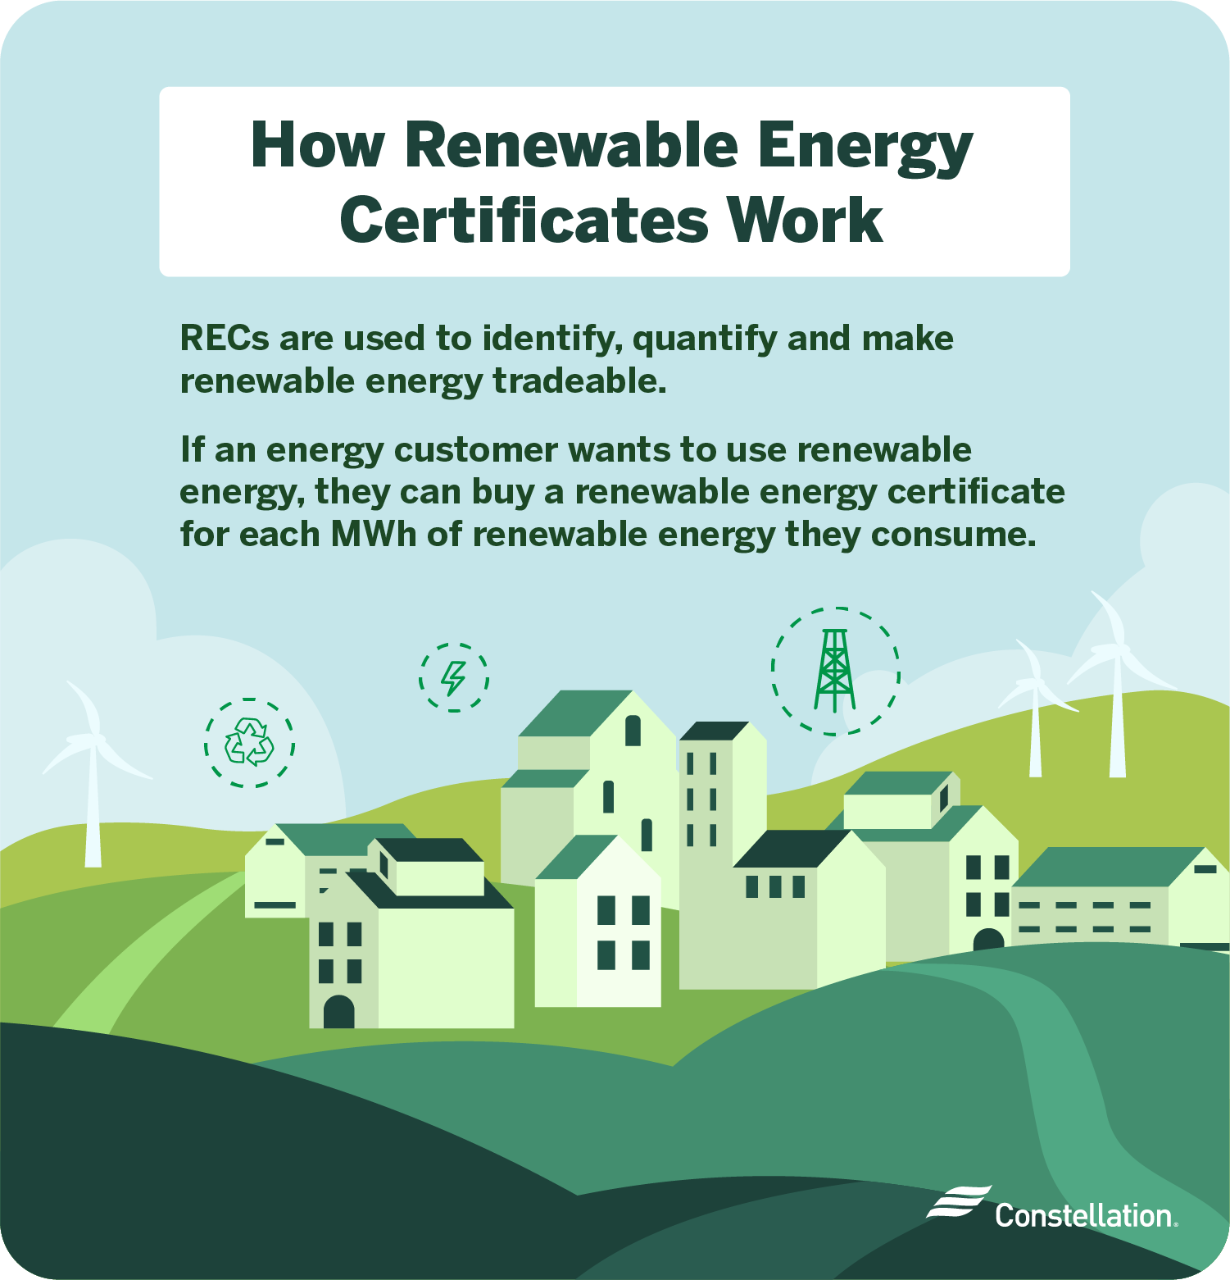 How do renewable energy certificates work?